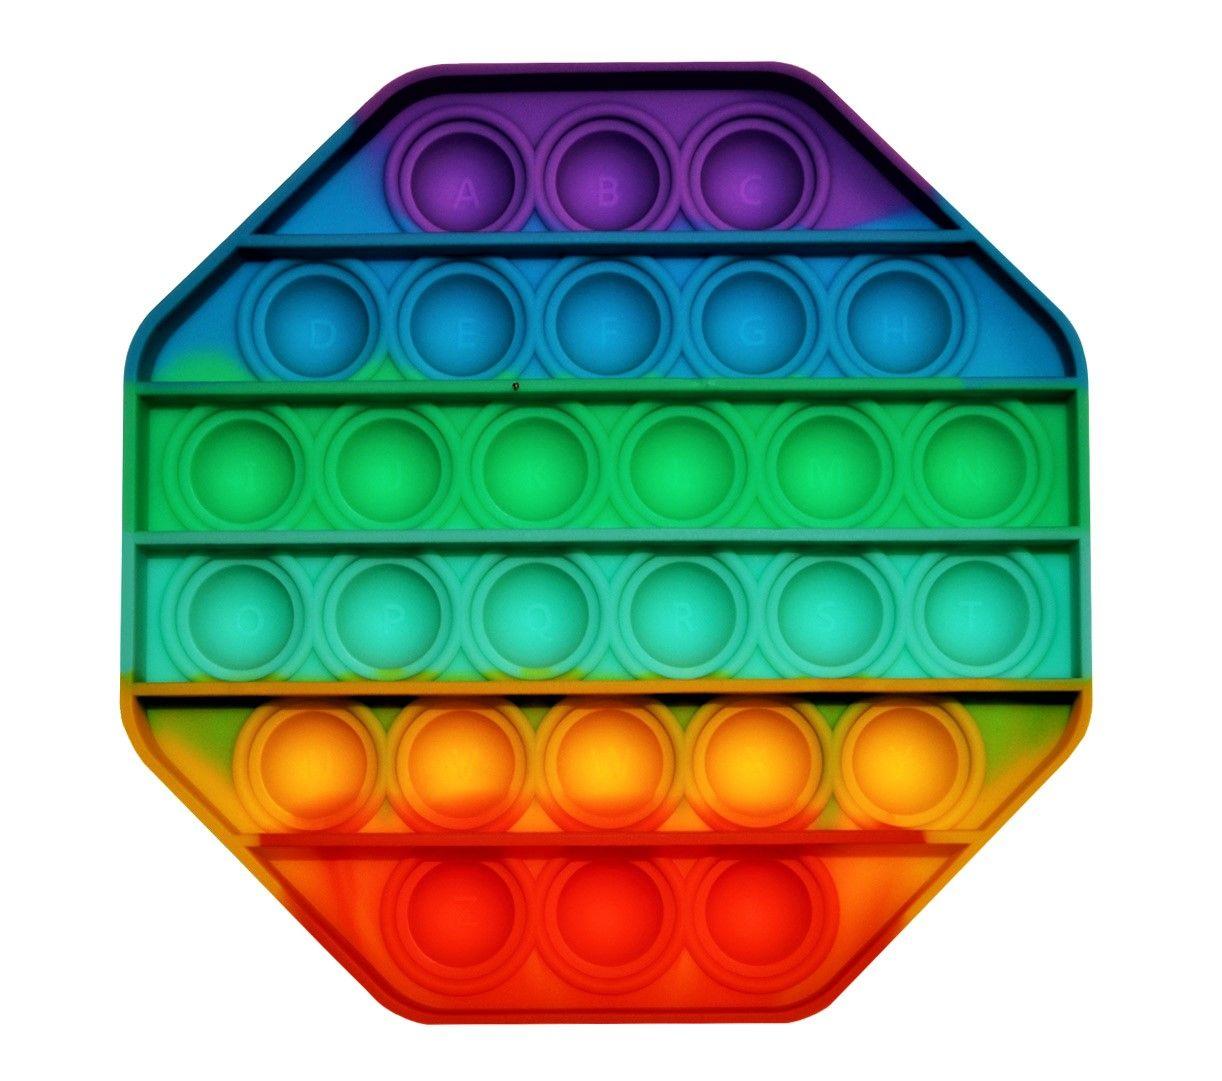 Desktop Silicone Brain-training Toys - Octagon Colorful